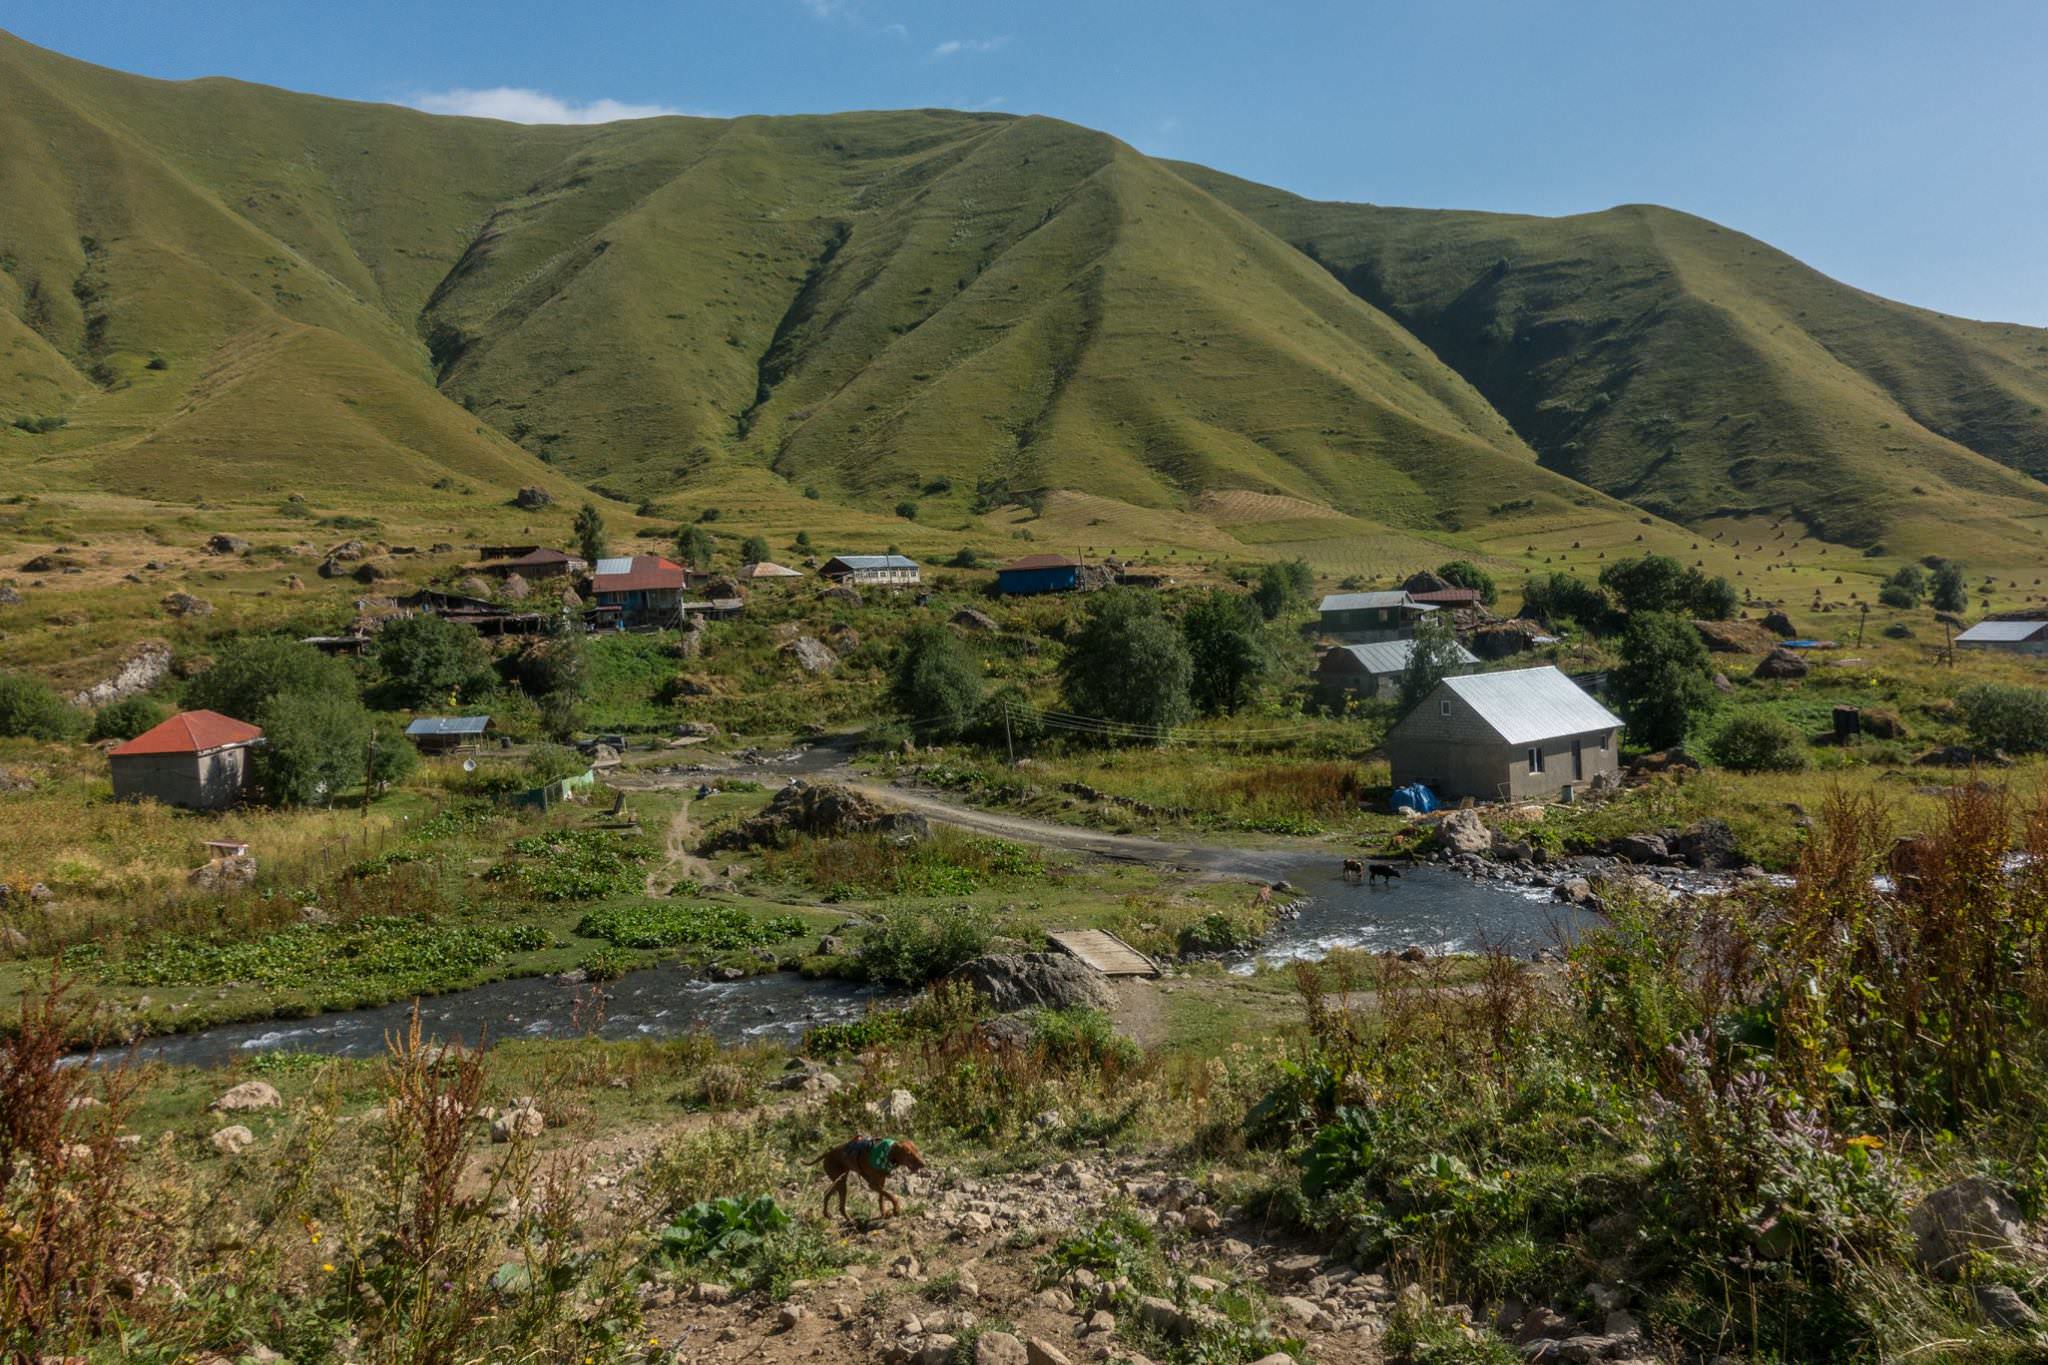 The hike starts at the Roshka village